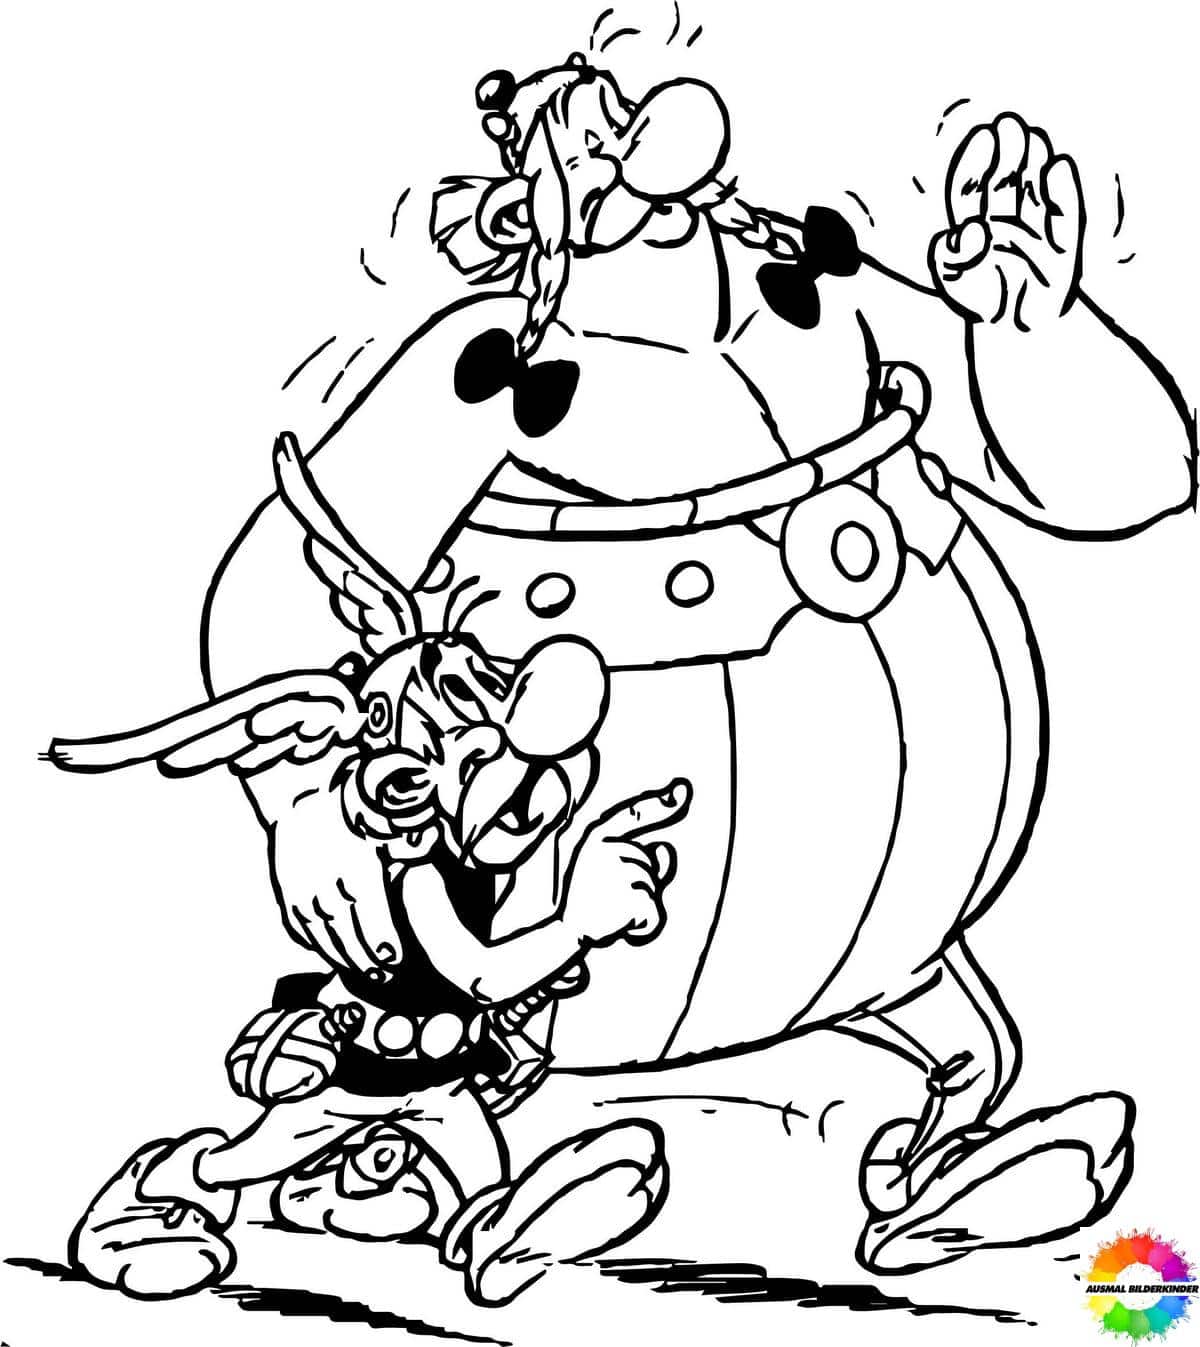 Asterix-and-Obelix-Ausmalbilder-ausmalbilderkinder-de-16